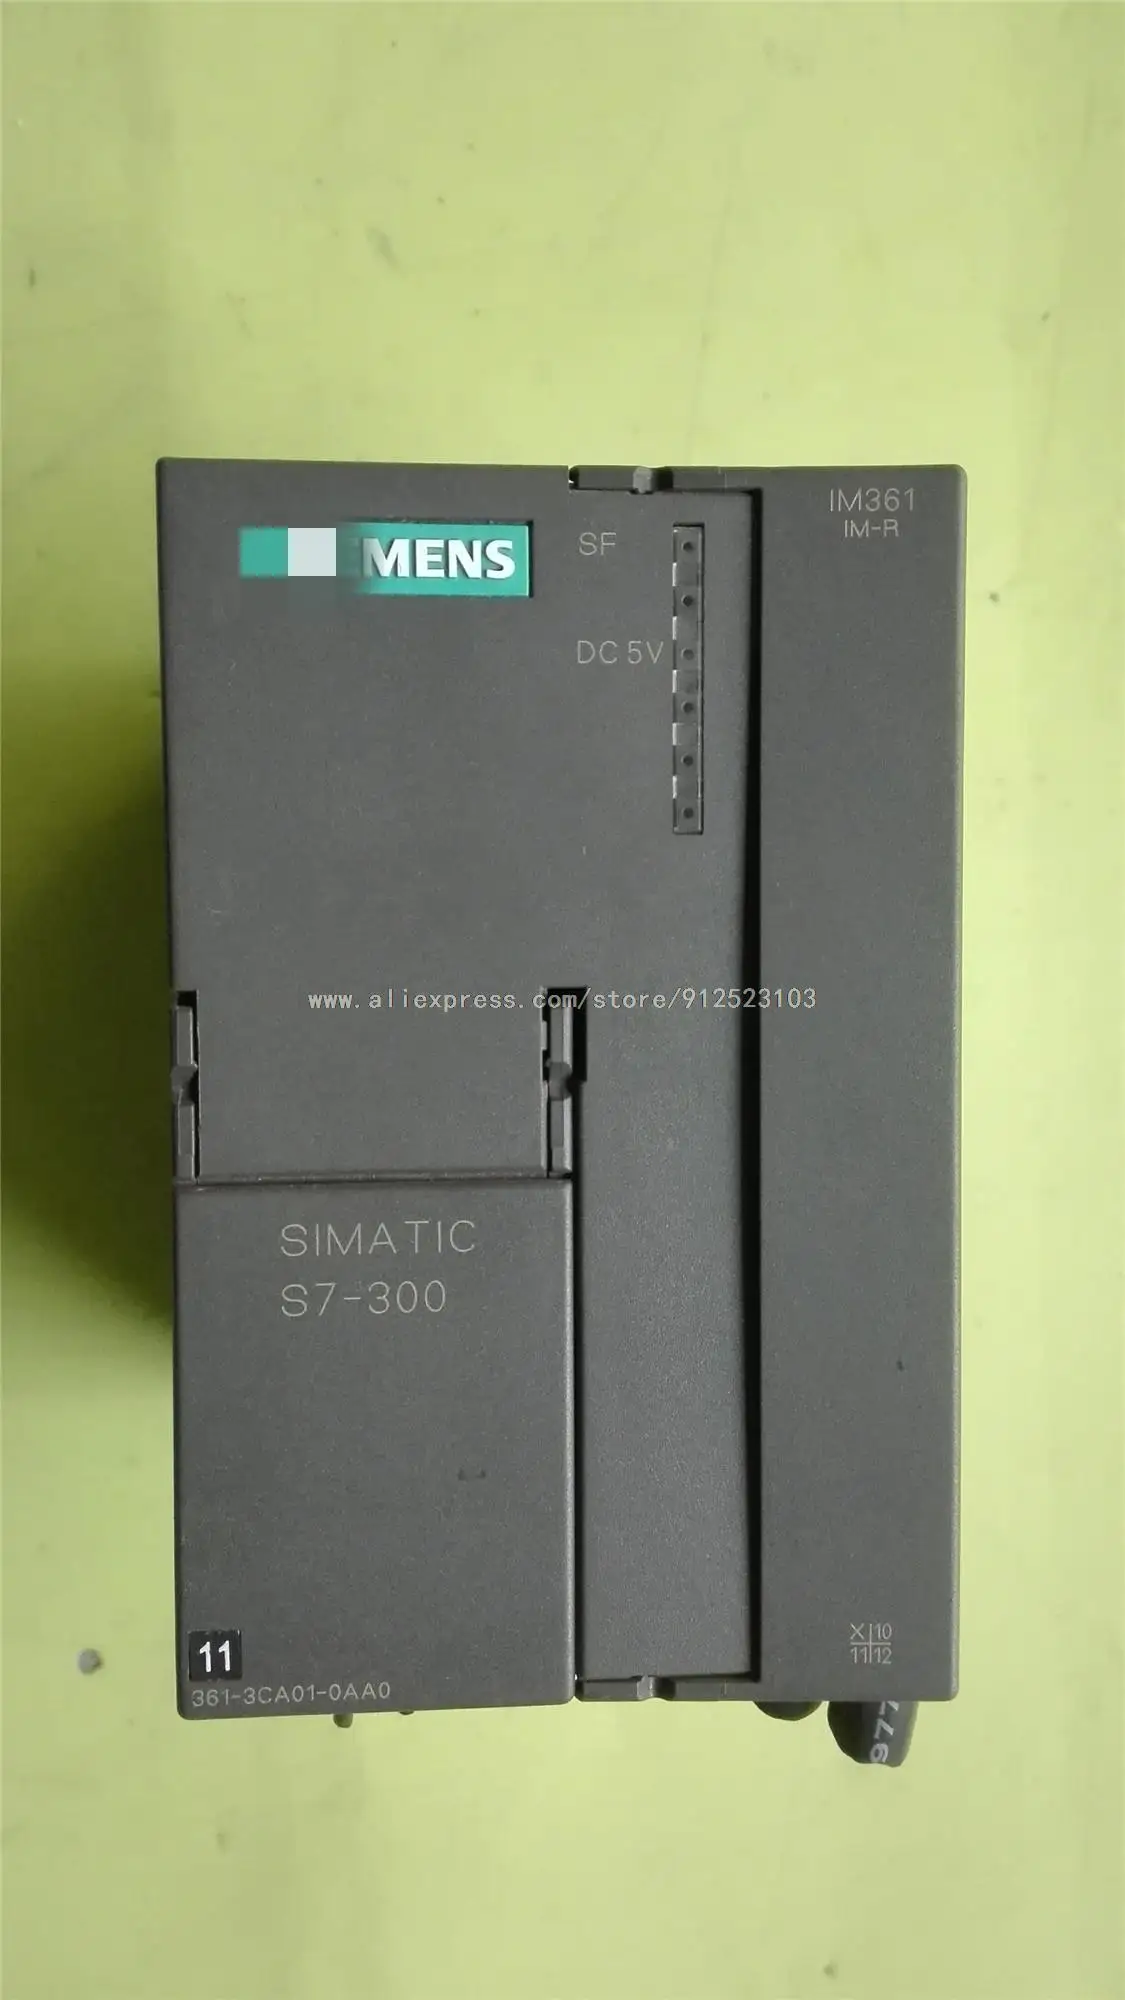 

In Stock SIEMENS Simatic S7-300 PLC Module 6ES7361-3CA01-0AA0 Connection IM361 Brand New Original